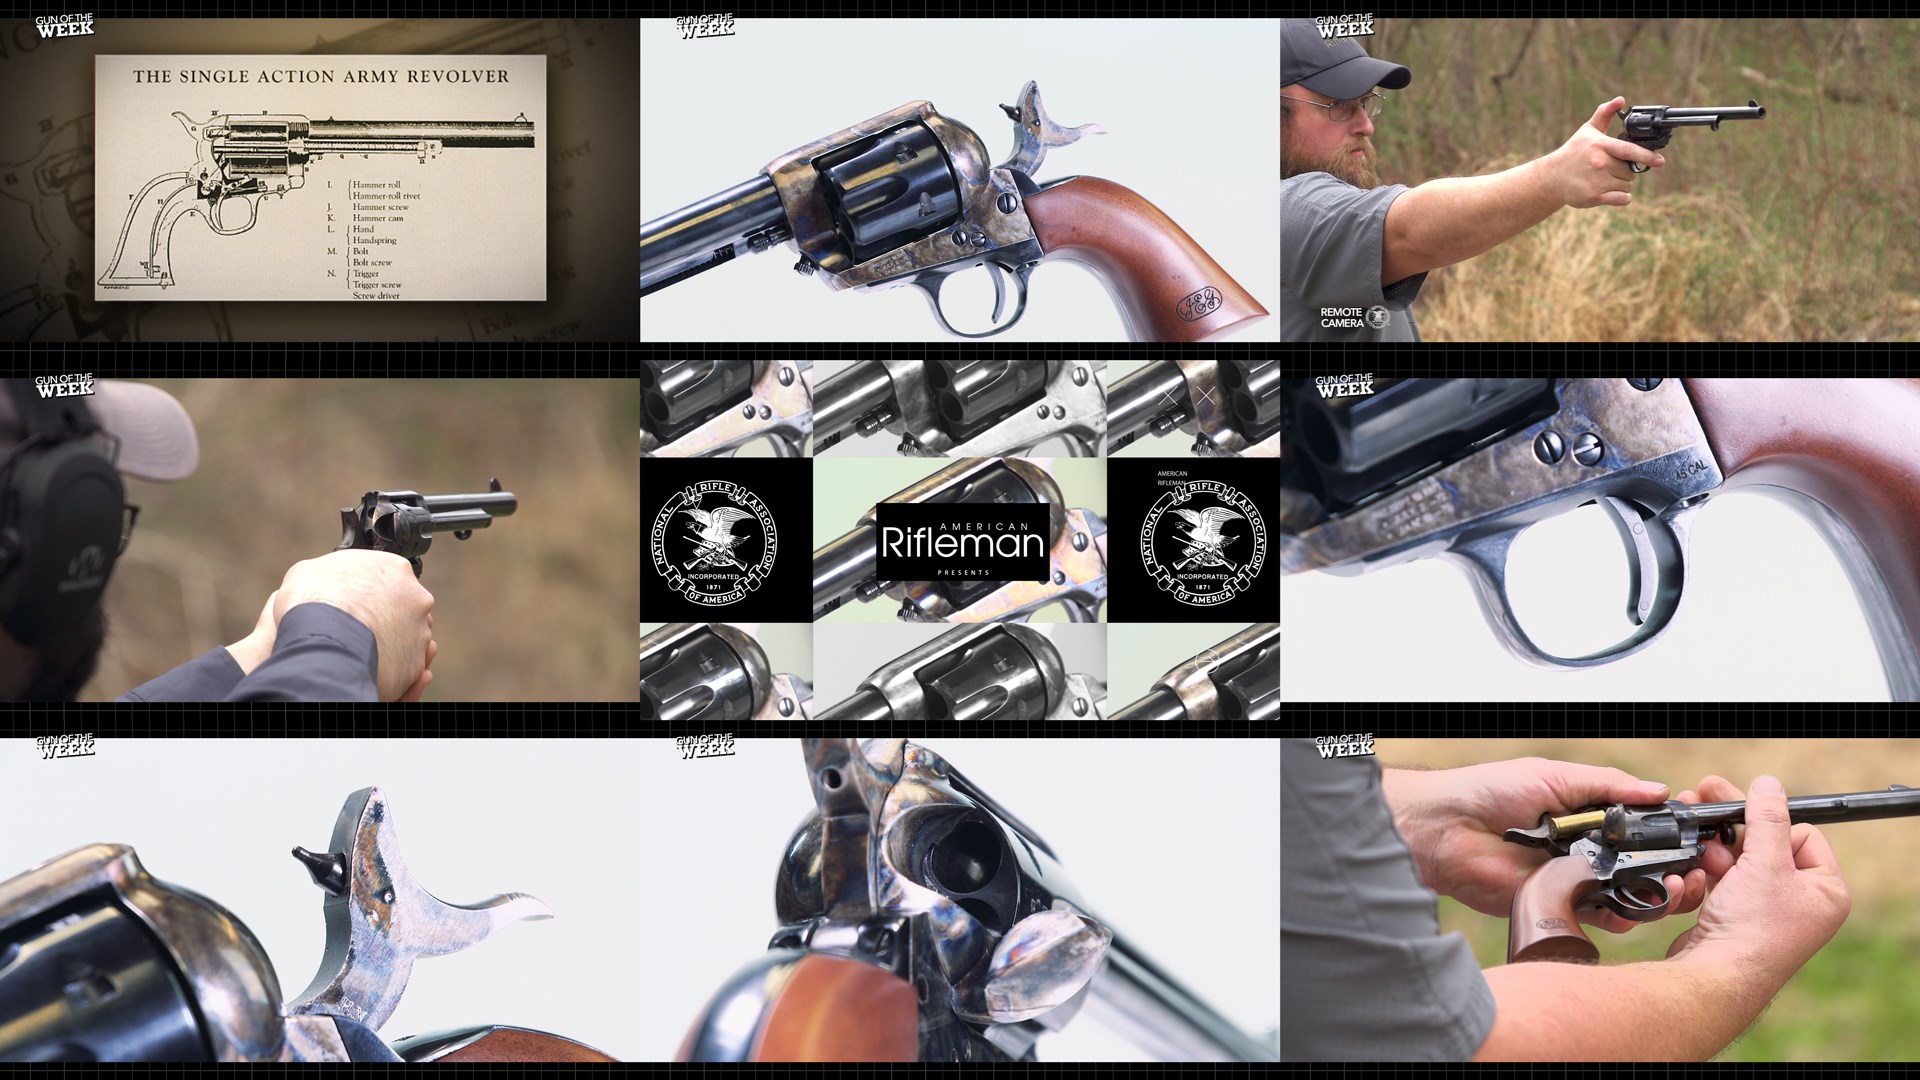 Cimarron Firearms Model P peacemaker colt single action army revolver tiles 9 images mosiac arrangement outdoors closeup man shooting gun